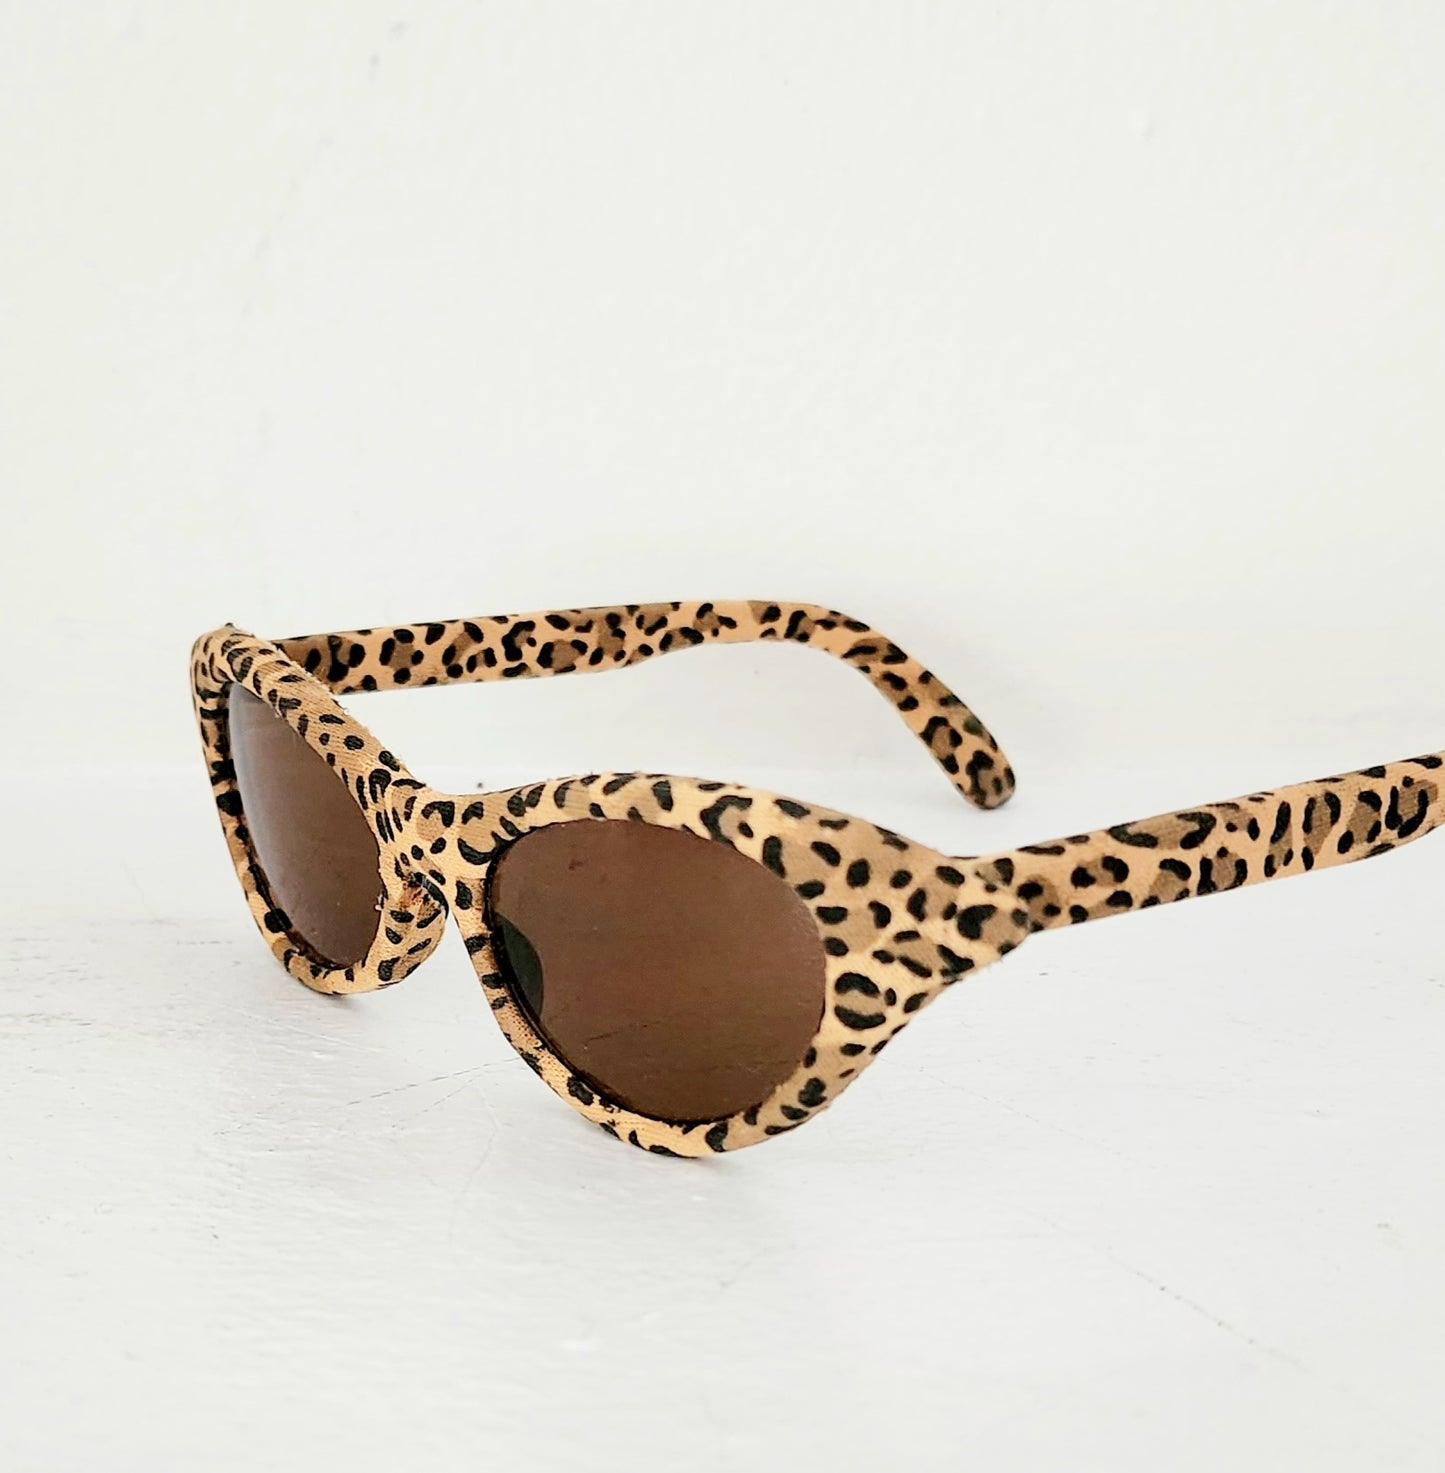 Vintage Cat Eye Sunglasses Leopard Print